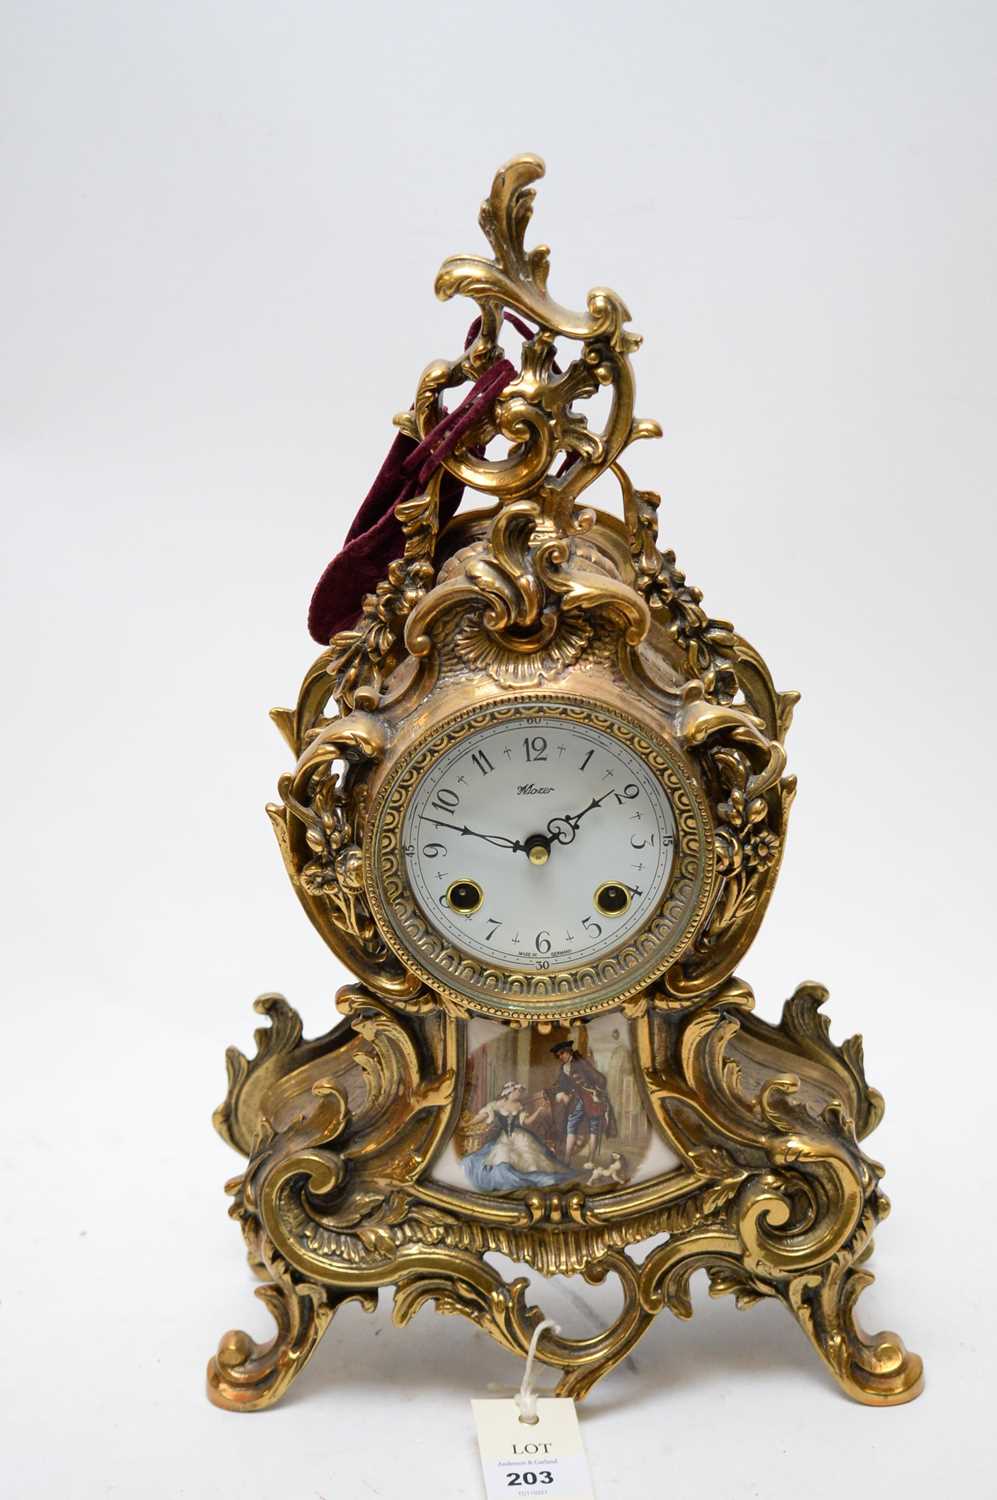 Lot 203 - A modern French style Mozer mantel clock.